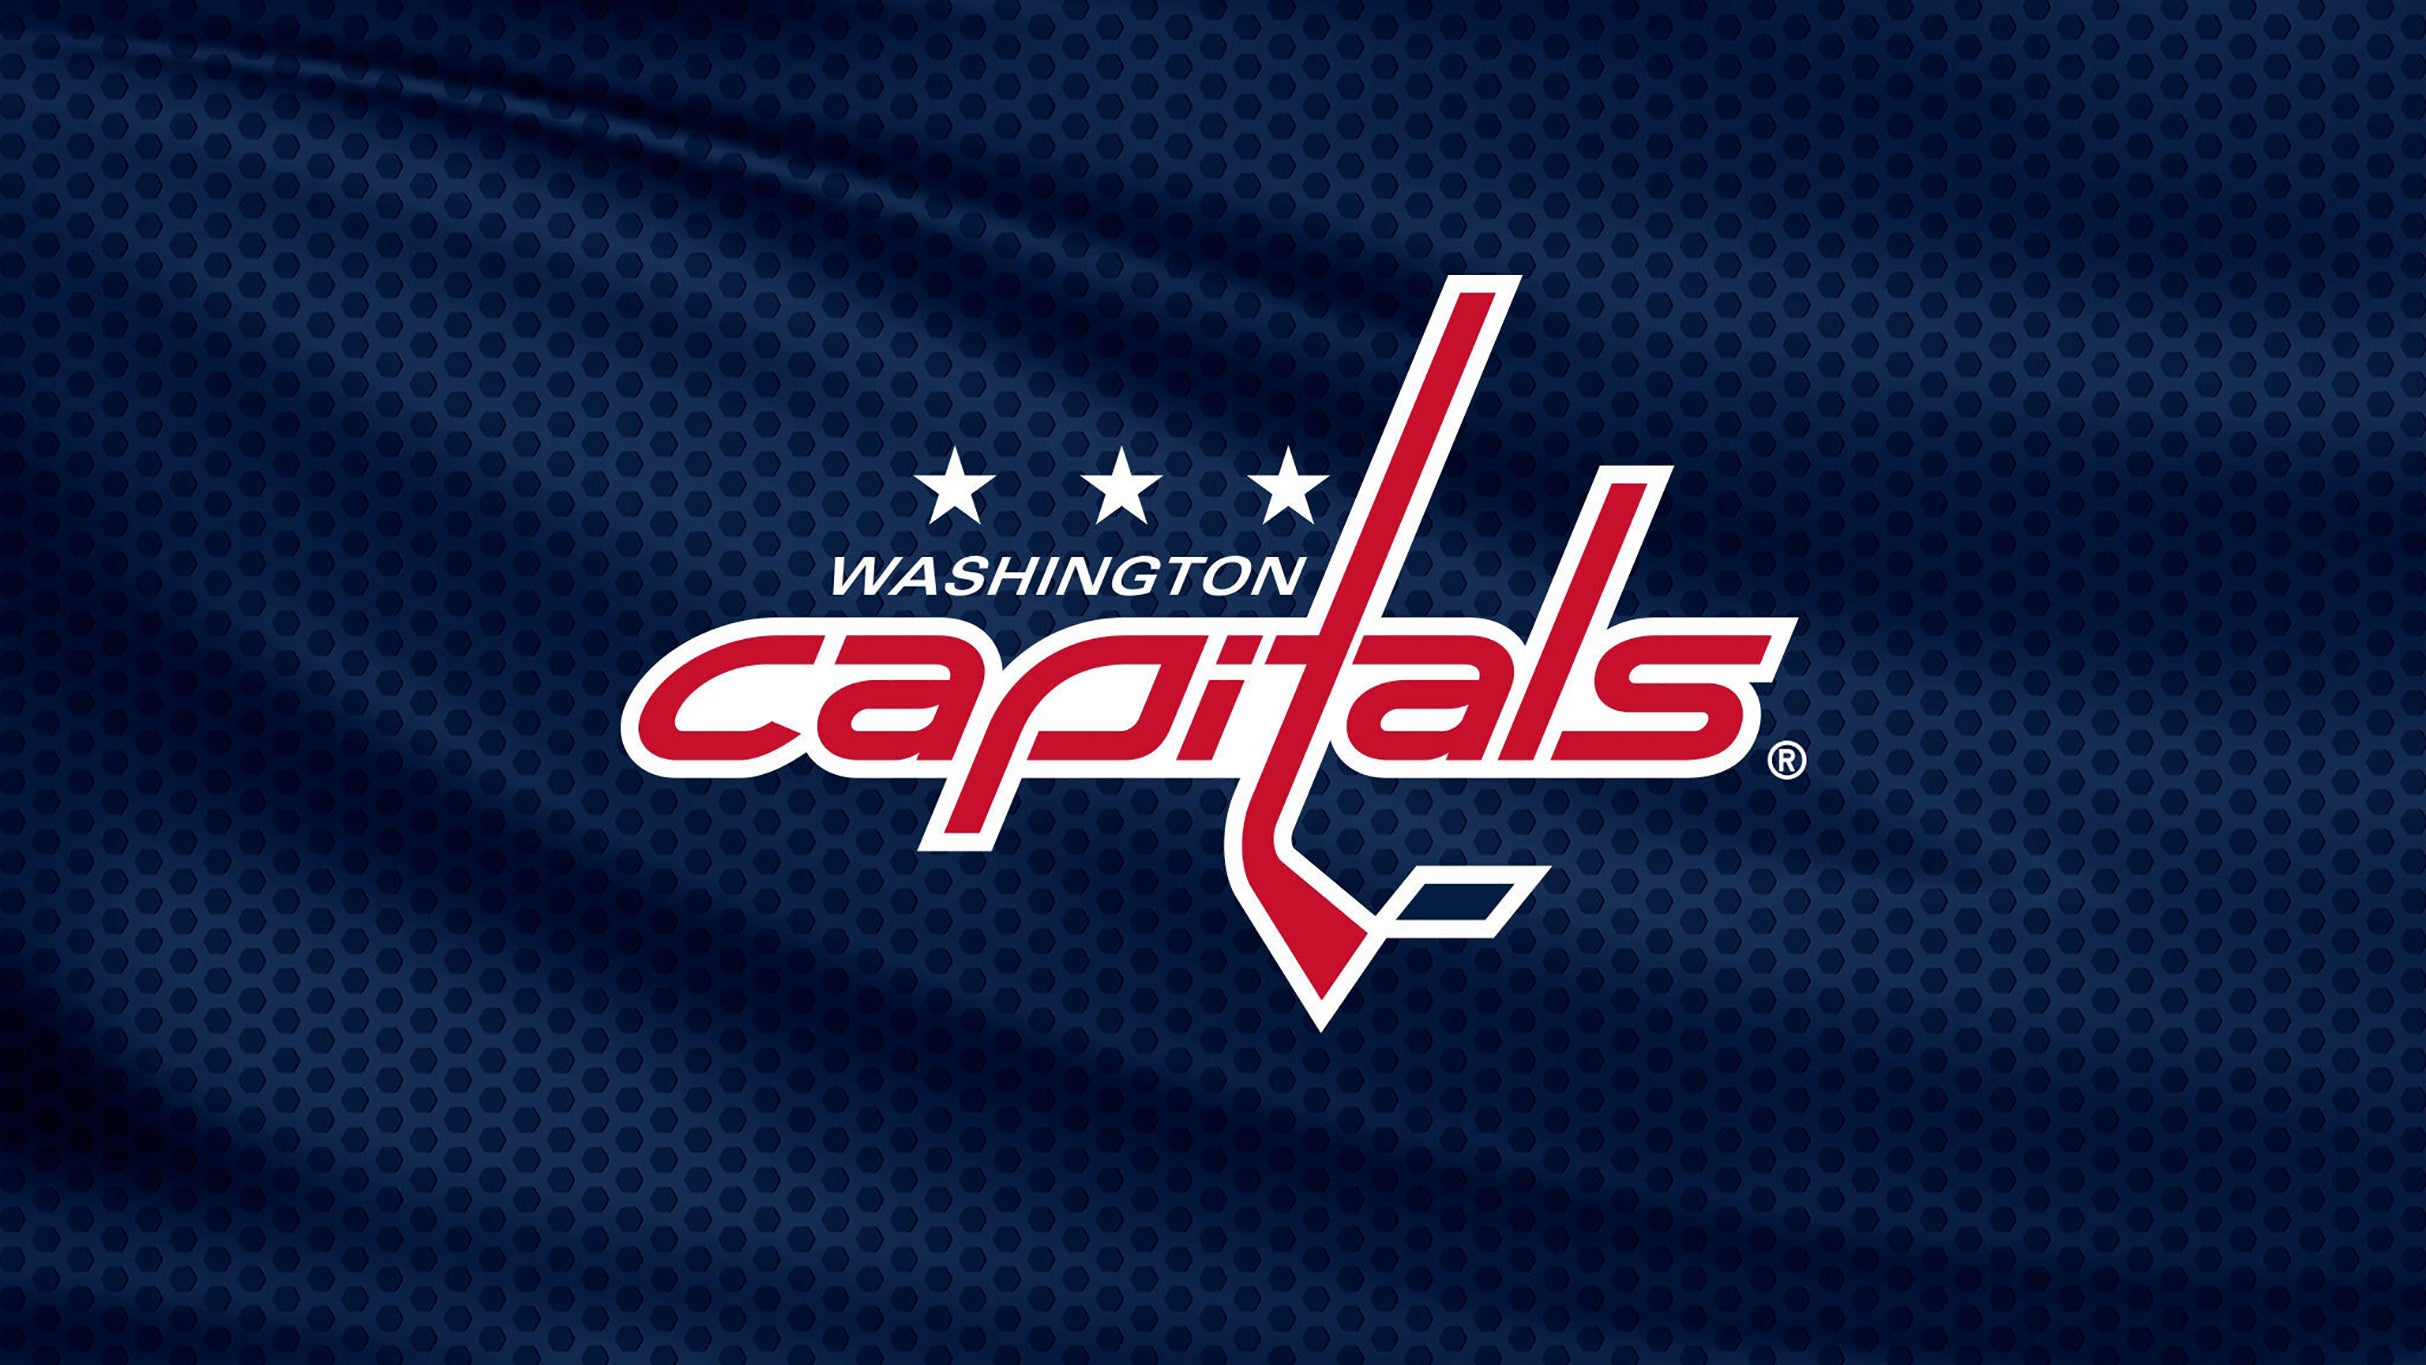 Capitals vs Blackhawks (Women in Hockey) - Washington, DC 20004